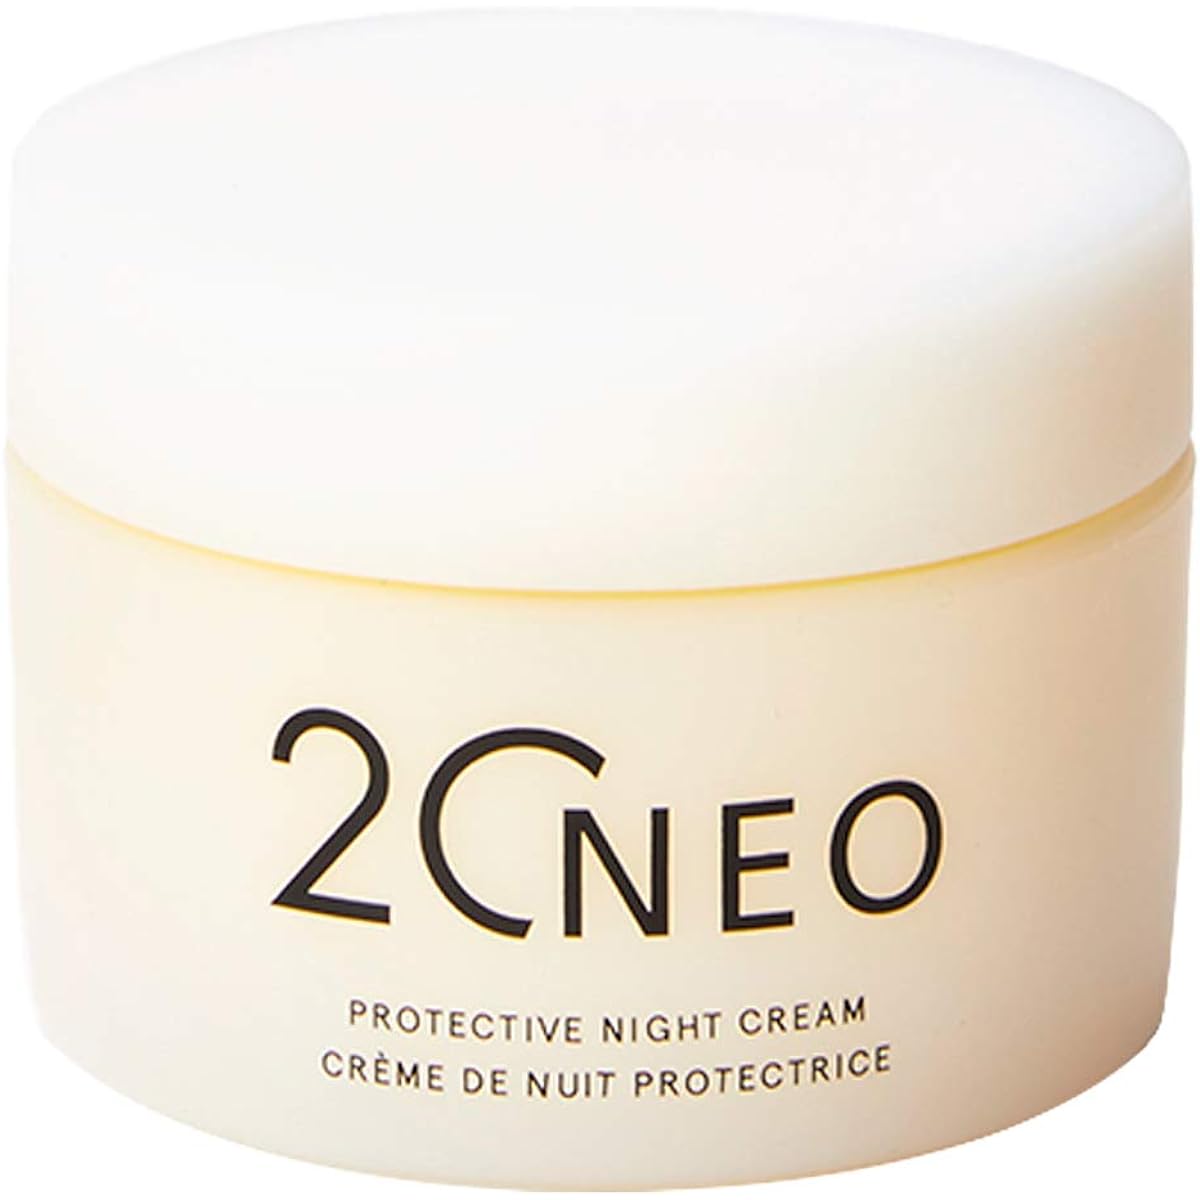 20NEO Protective Night Cream 50g [Blue light damage (dryness, rough skin) prevention cream] Moisturizing for 6 hours